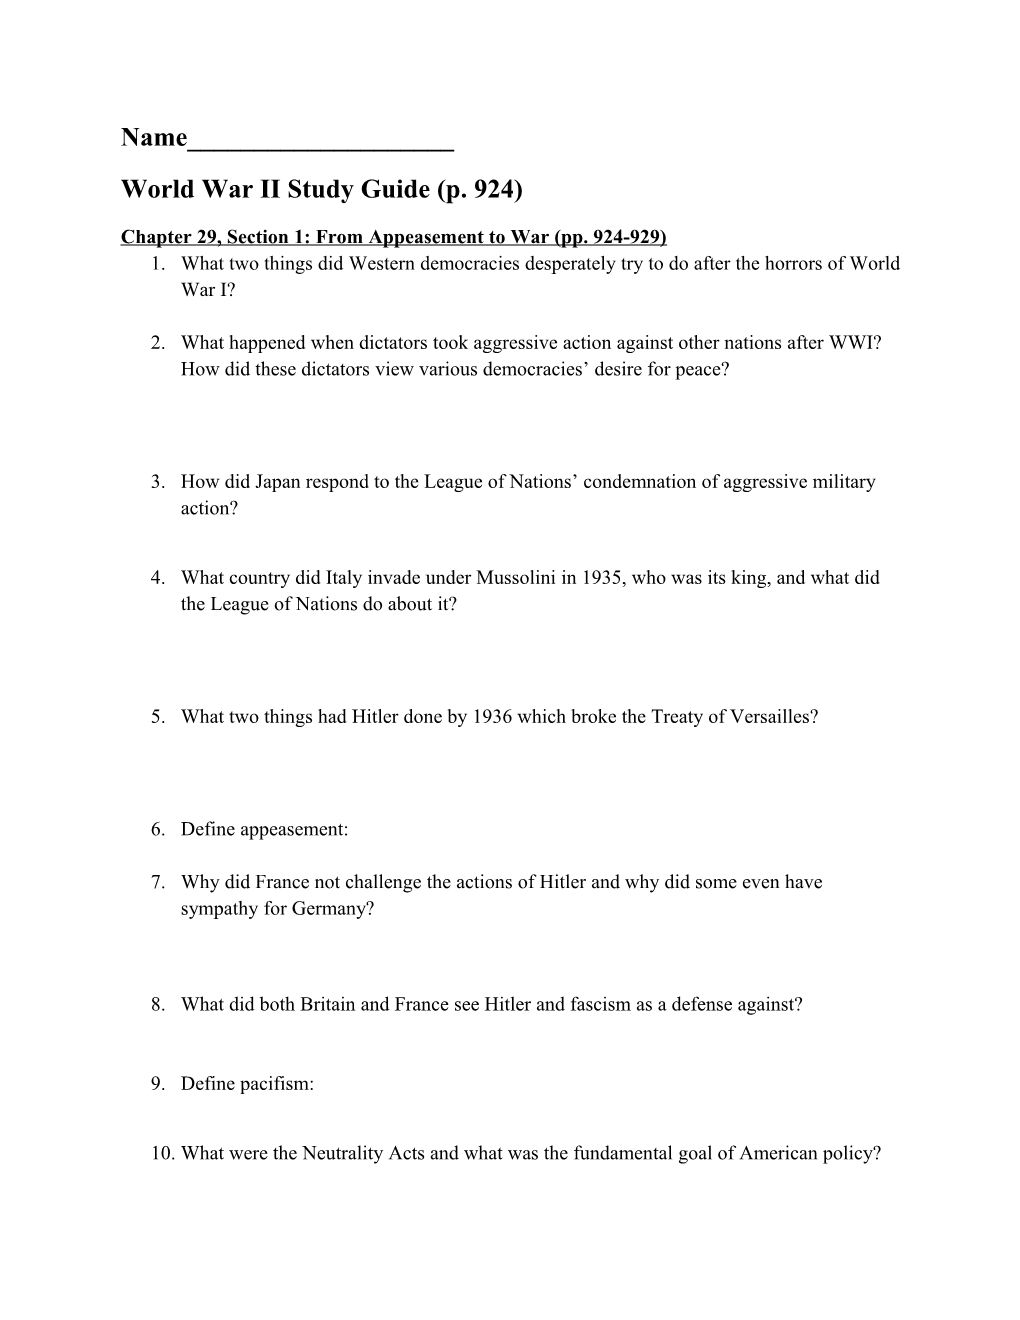 World War II Study Guide (P. 924)